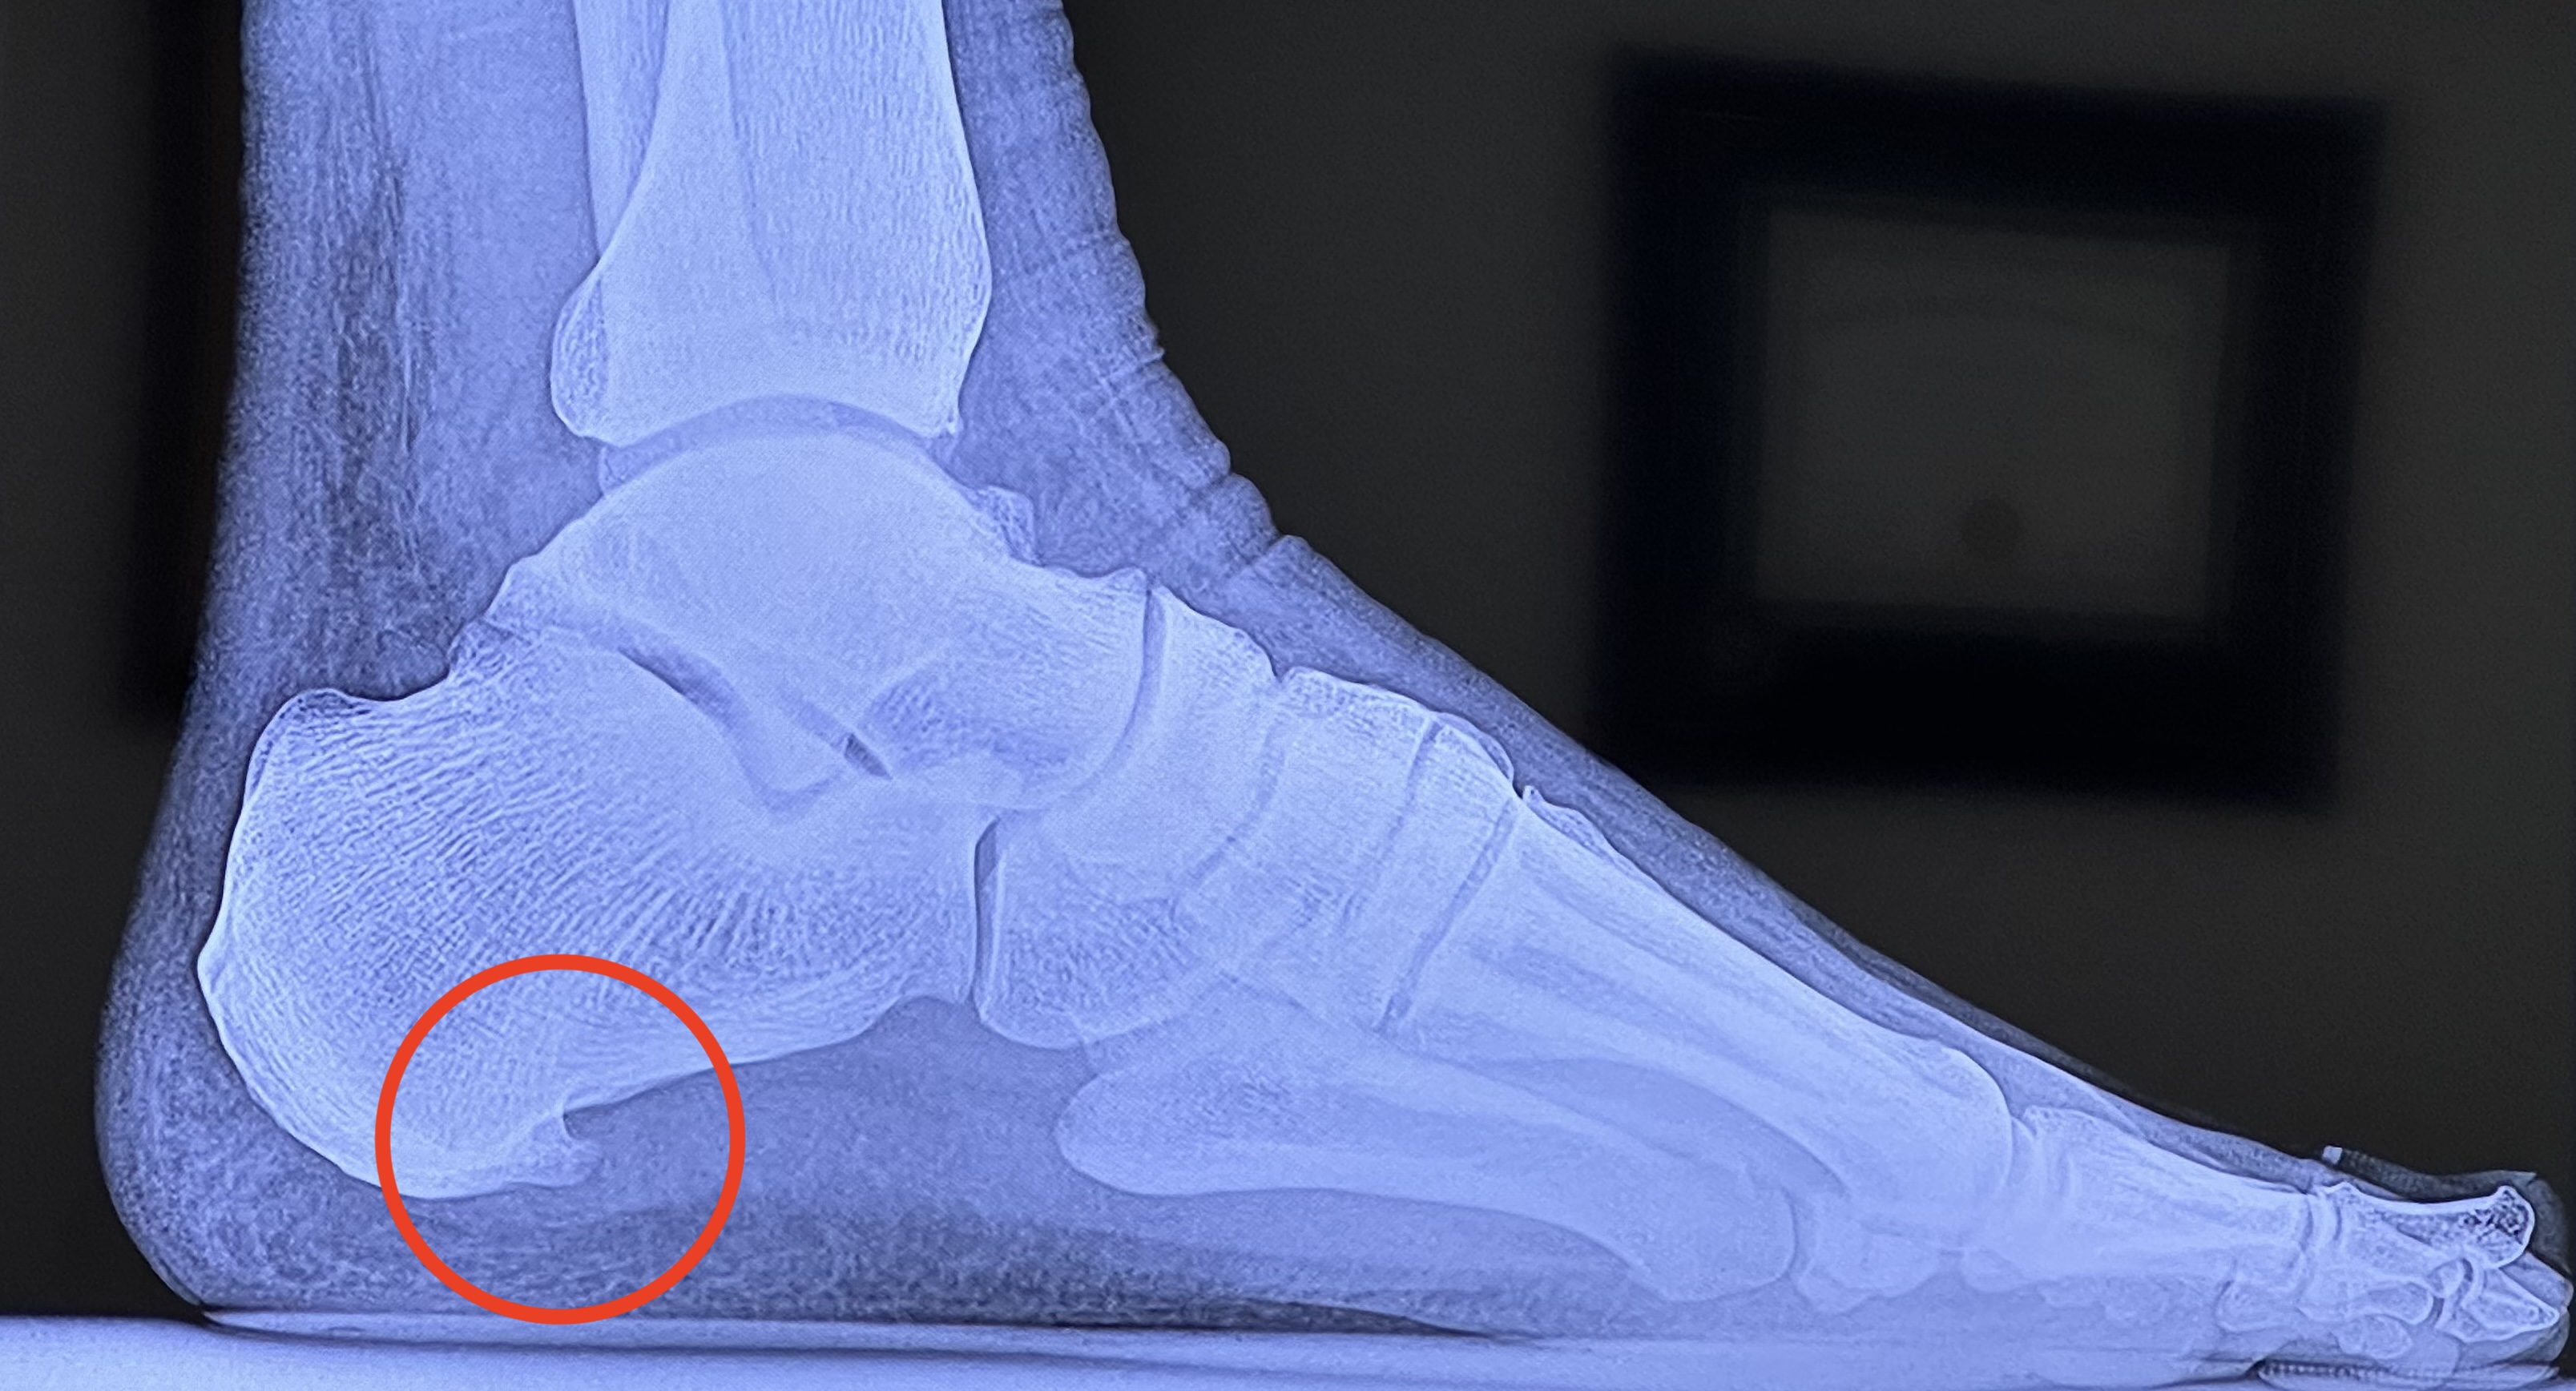 Matt Coneybeare - Marathon 29 - Heel X-Ray Bone Spur